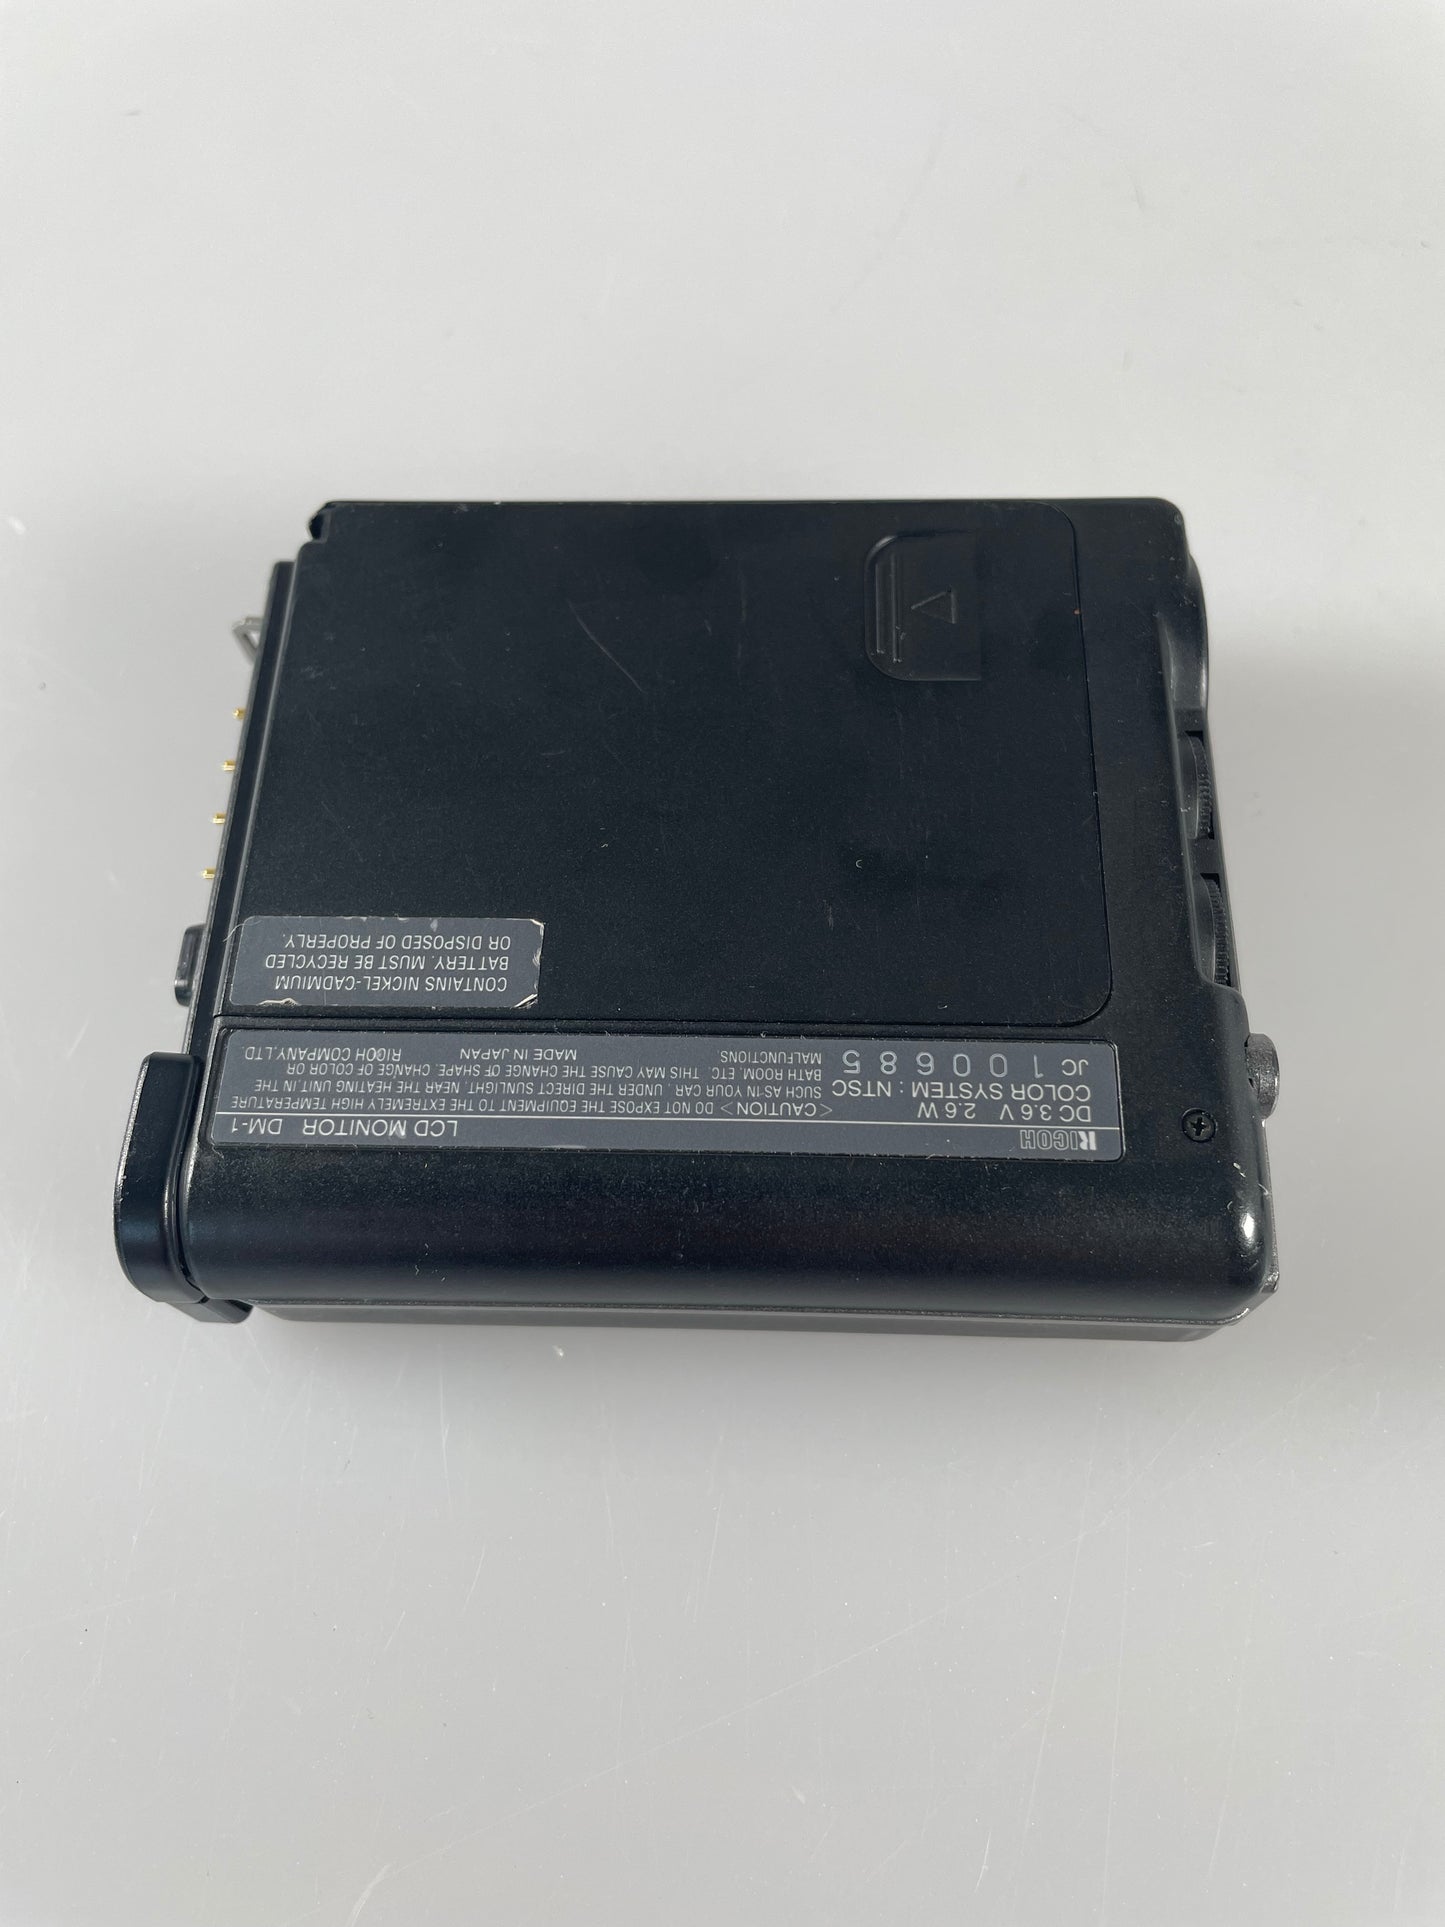 RICOH RDC-1 DIGITAL CAMERA w/DM-1 LCD MONITOR +BATTS+8MB CARD